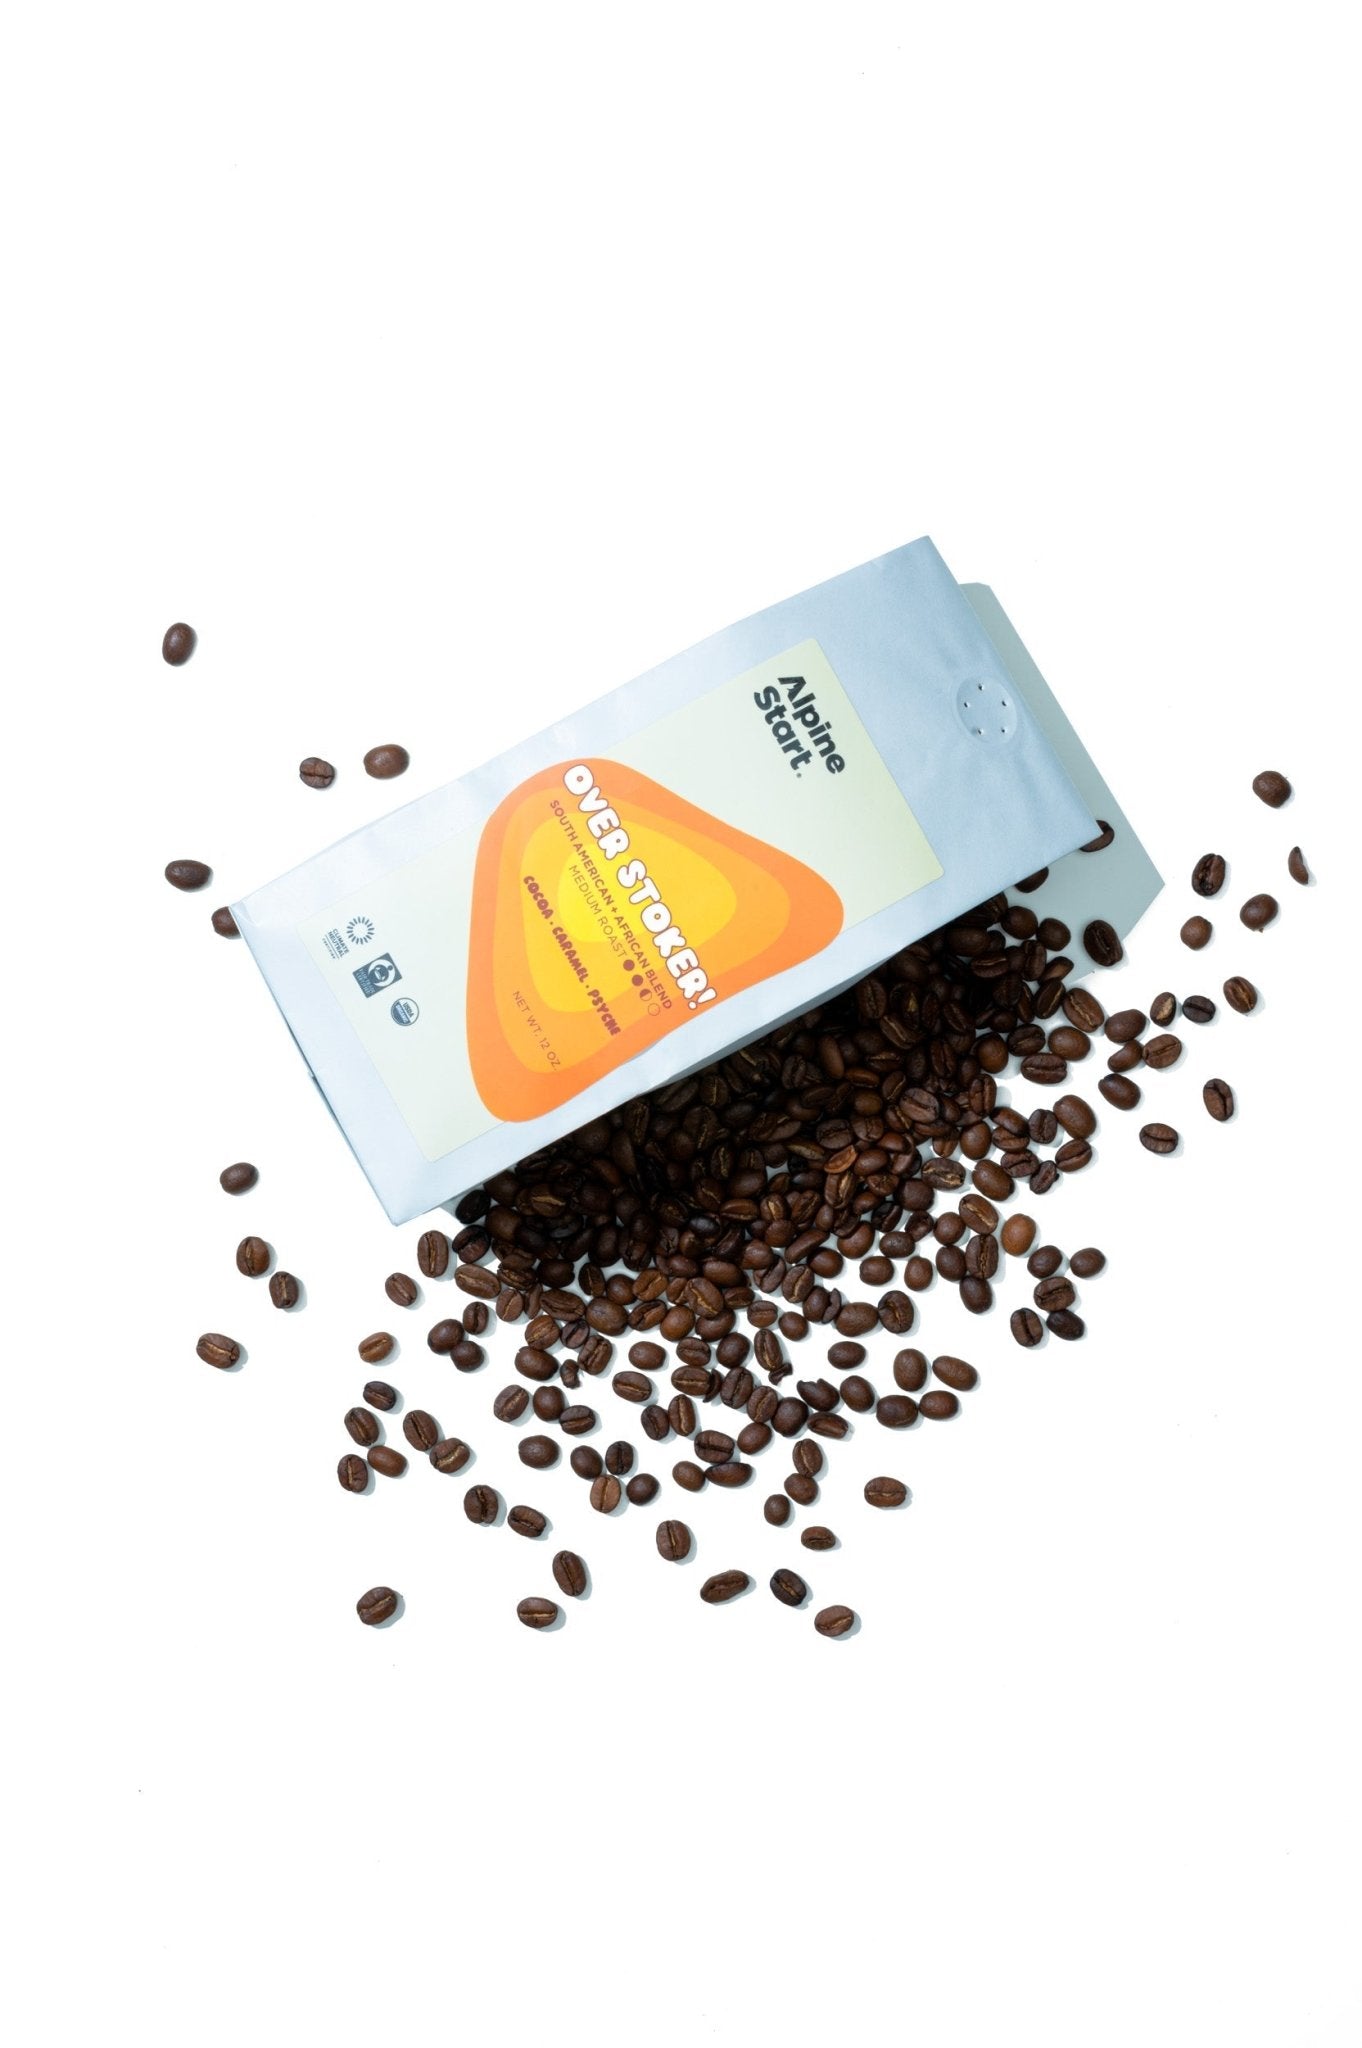 OCU Overstoker! Whole Bean Coffee - Alpine Start